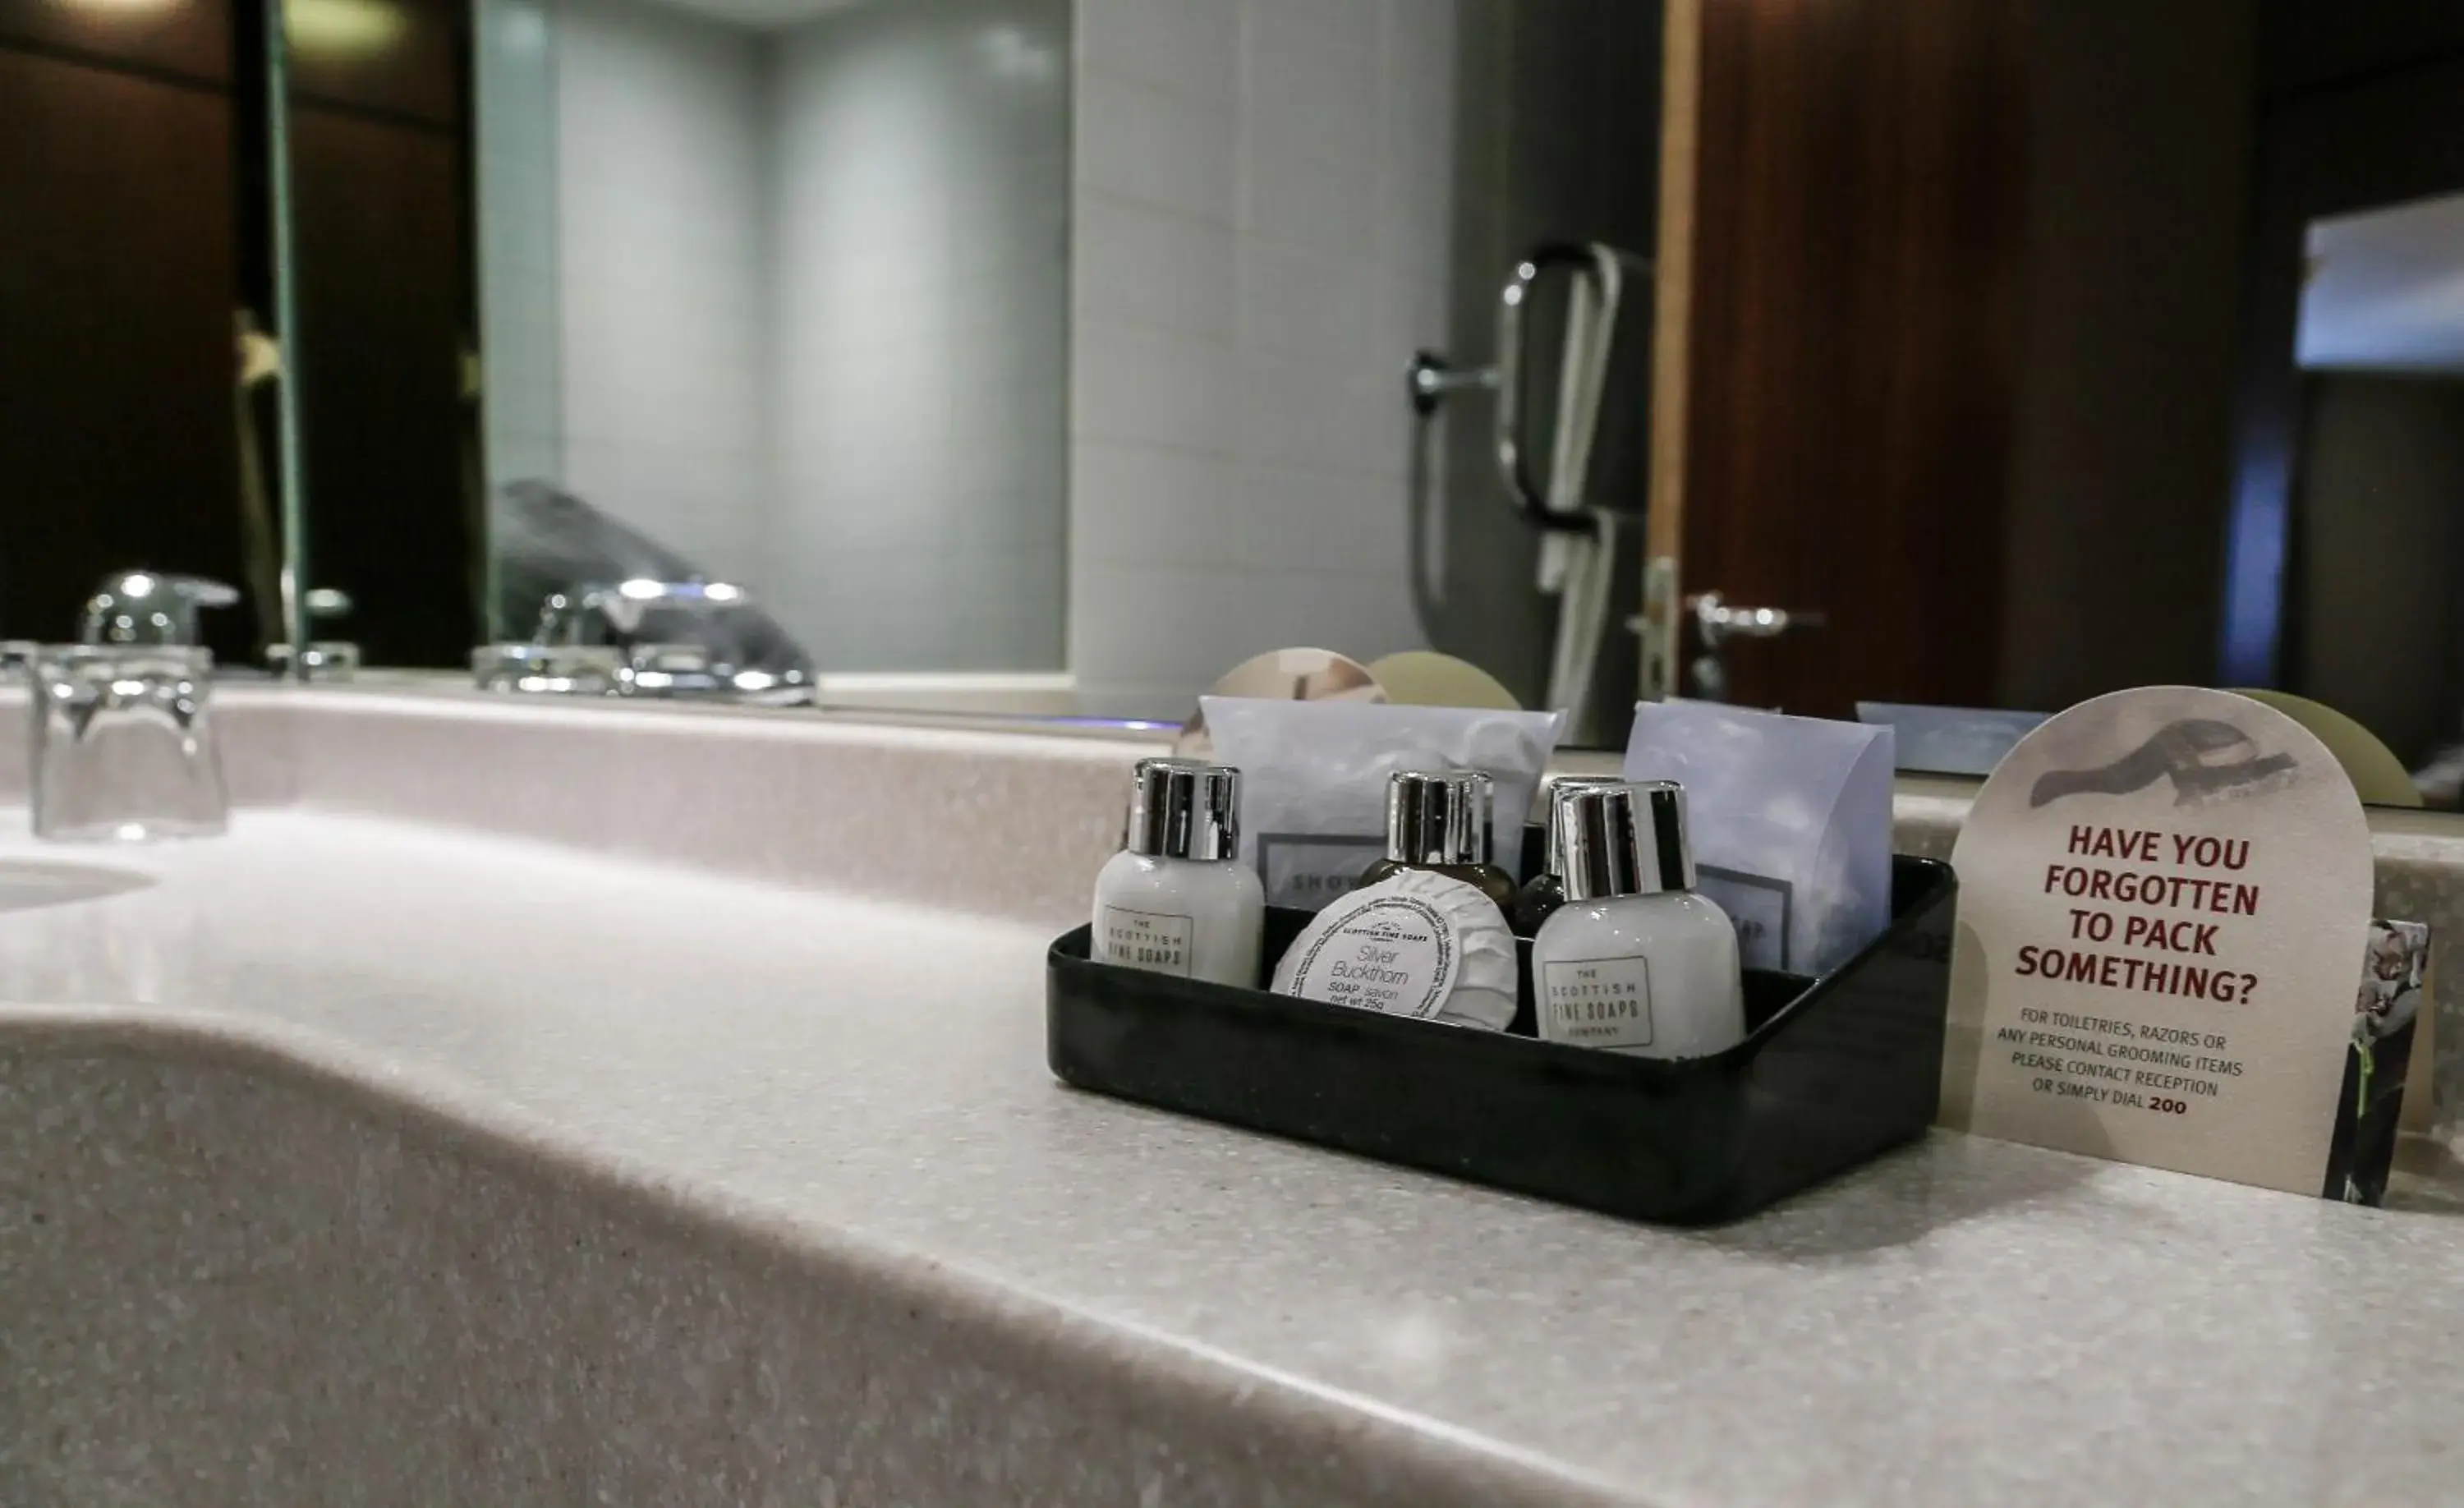 Bathroom in Alona Hotel